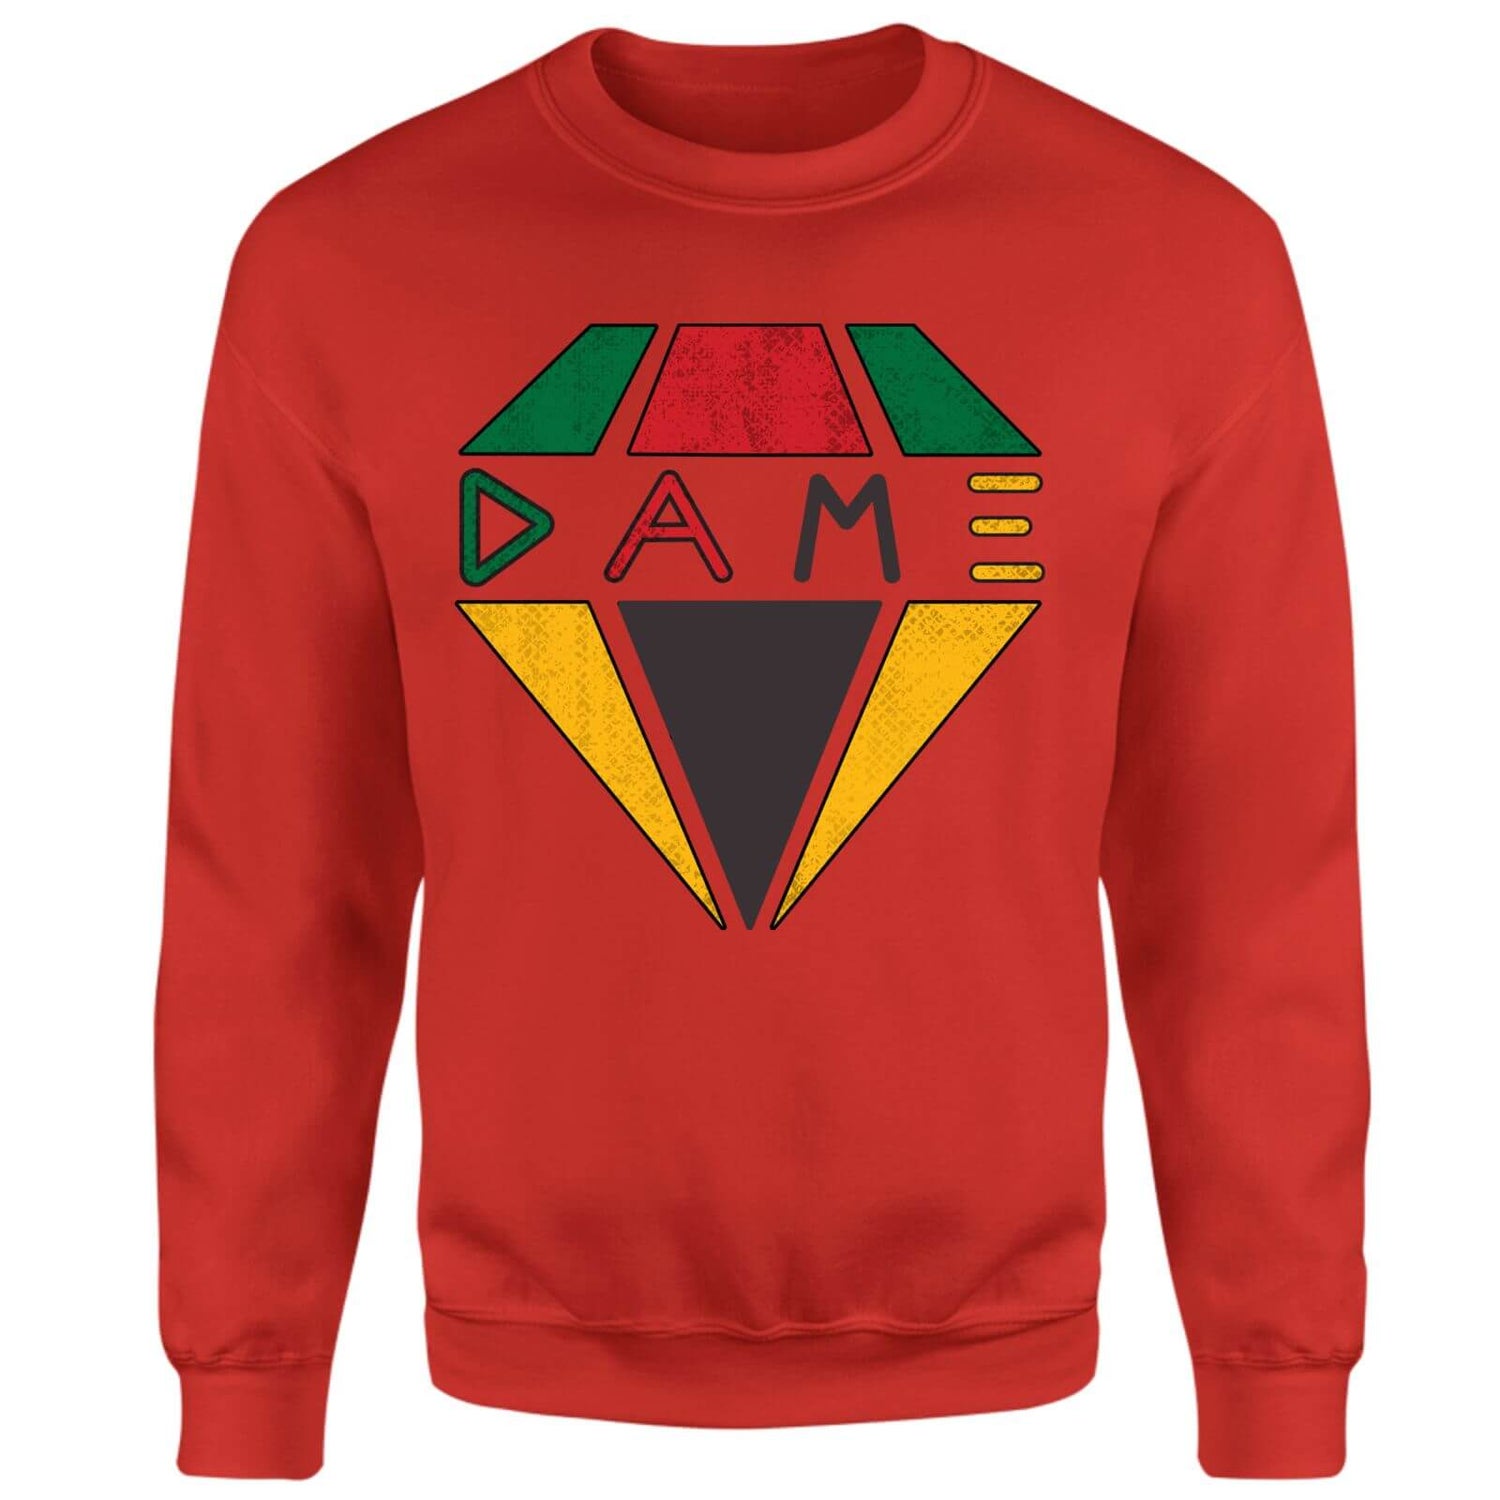 Creed DAME Diamond Logo Sweatshirt - Red - XS